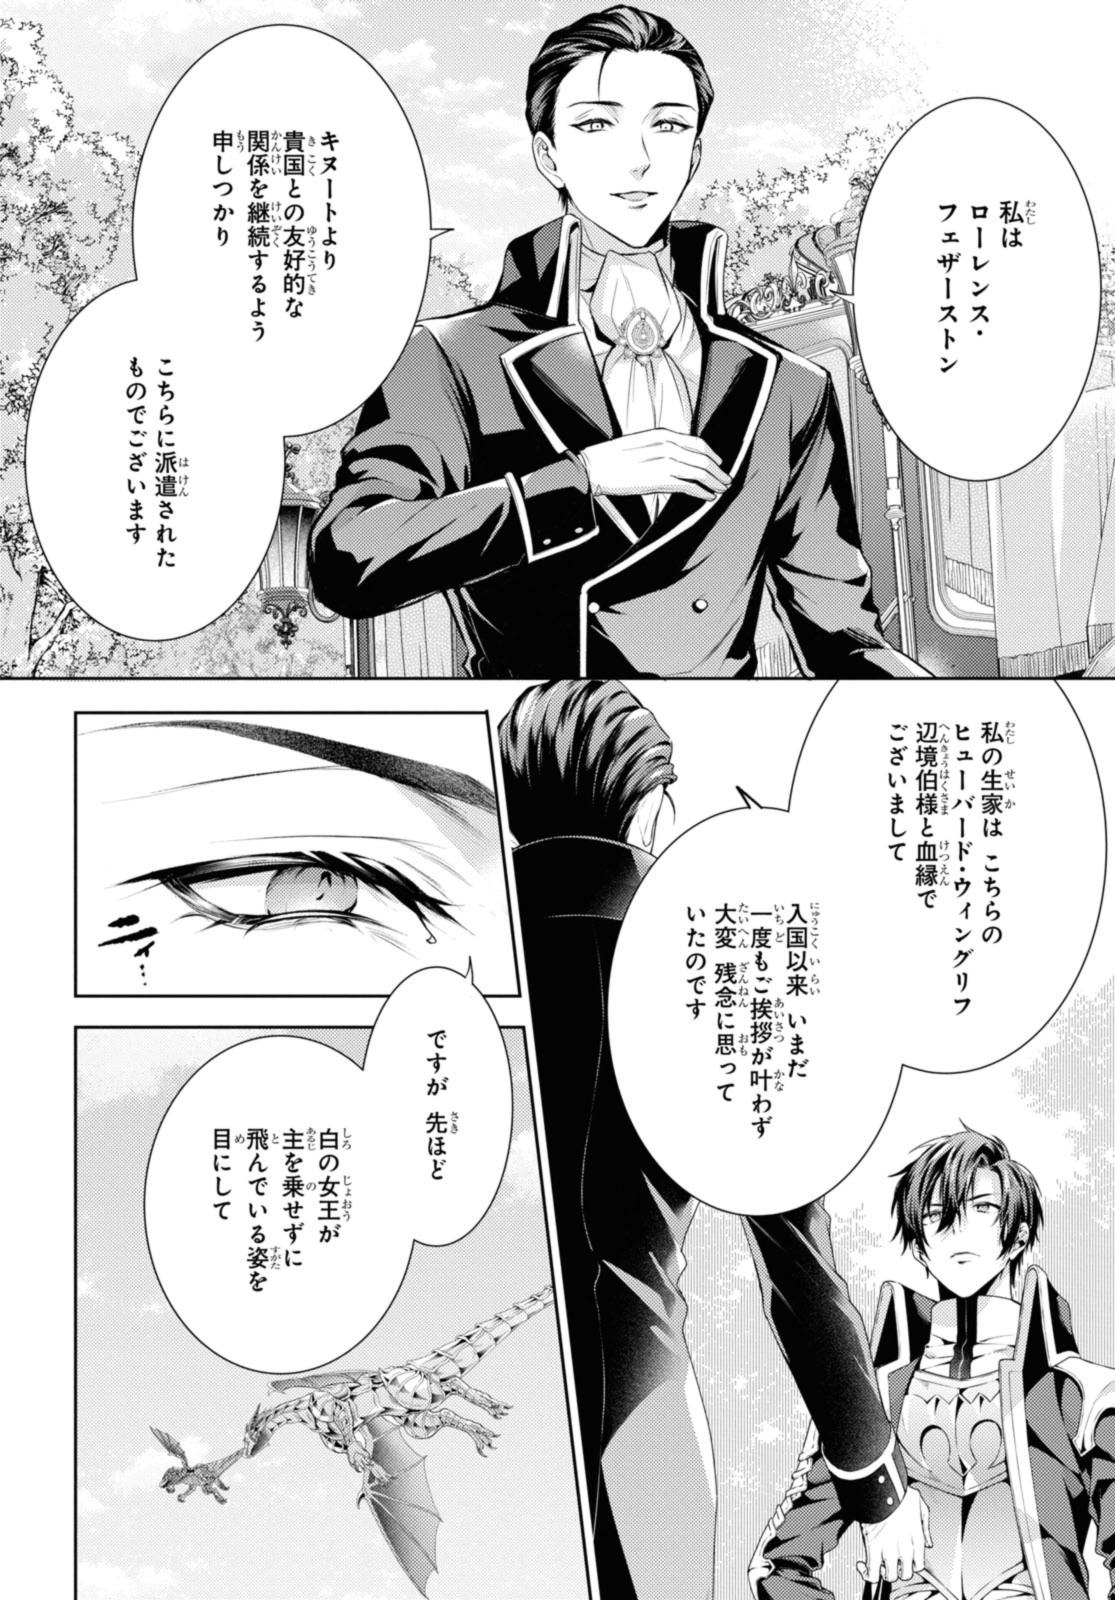 Ryukishi no Okiniiri - Chapter 44.2 - Page 8